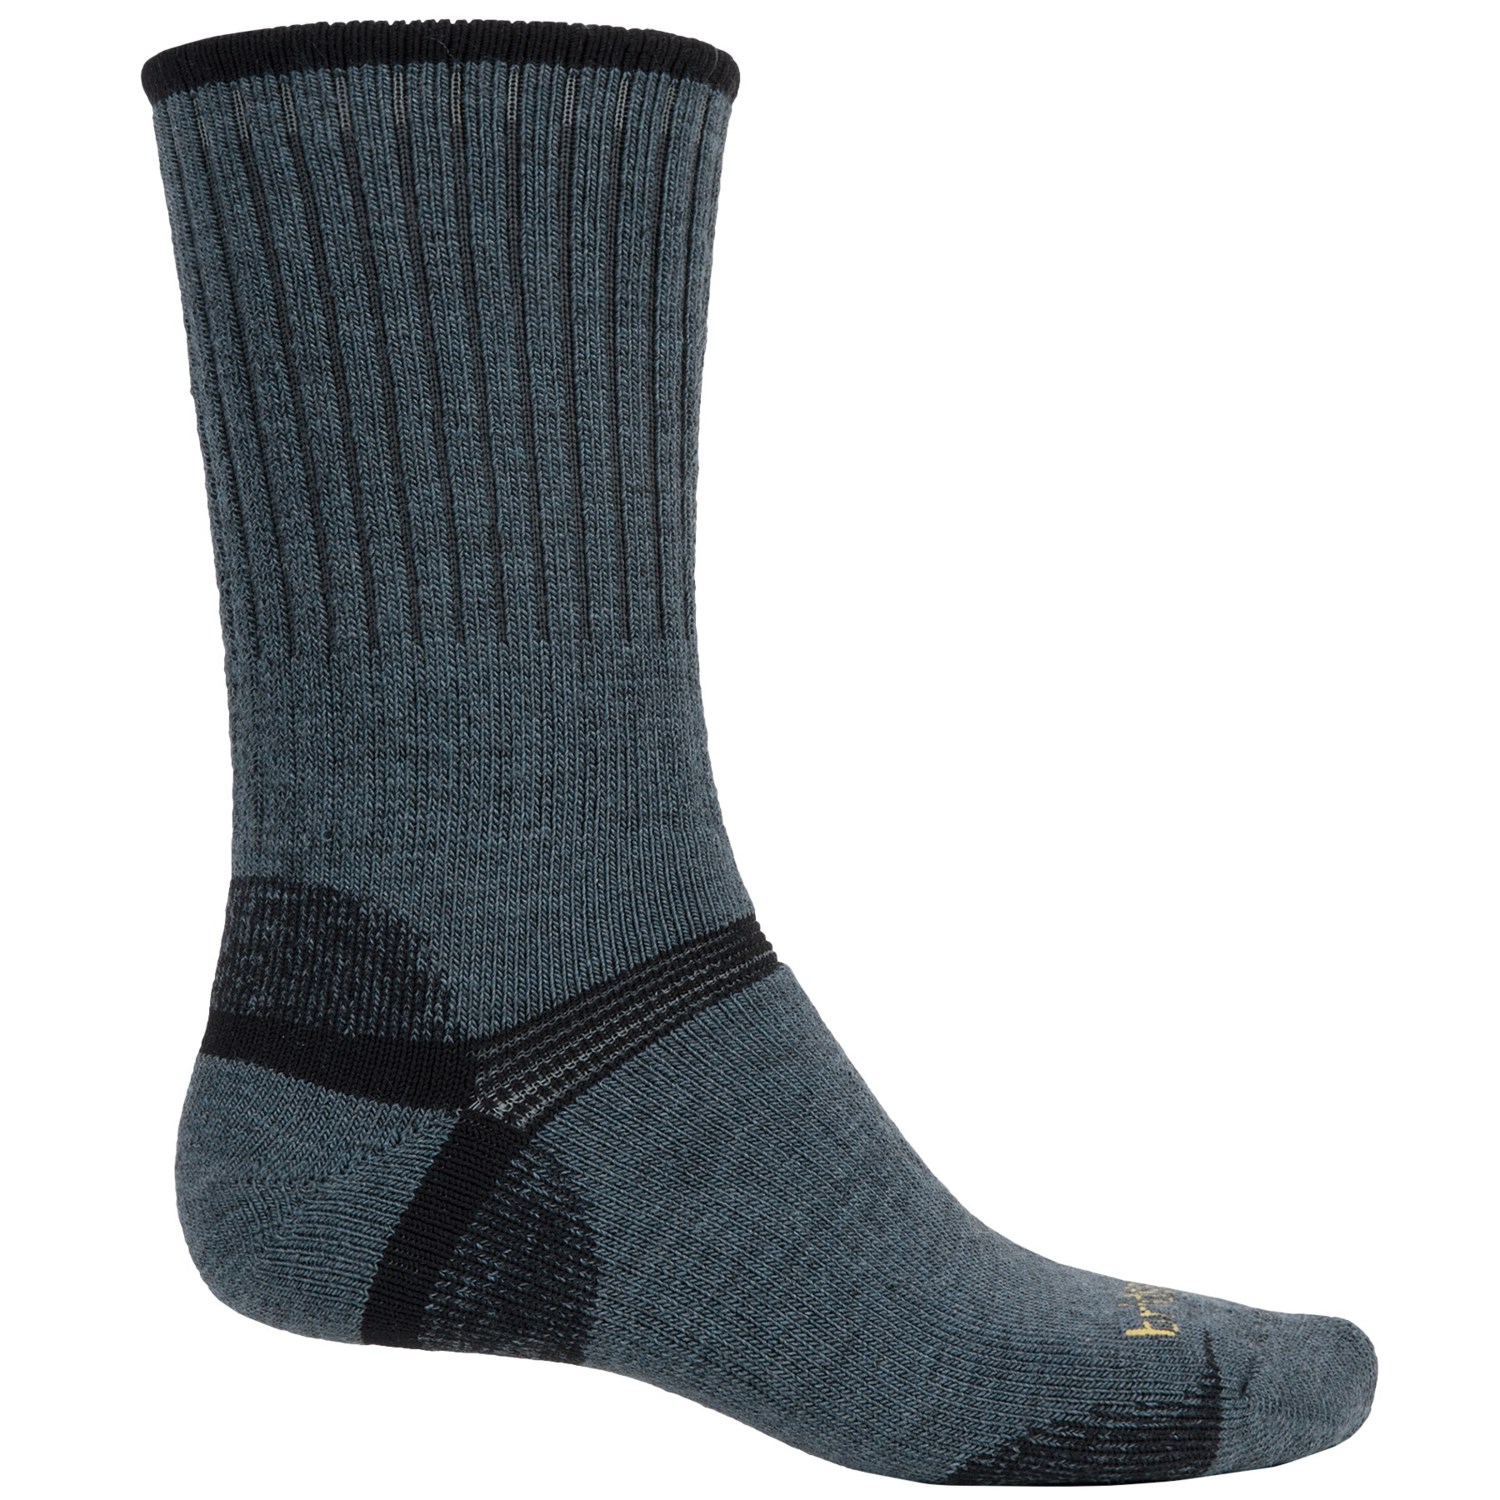 Bridgedale Merino Wool Socks (For Men) - Save 52%